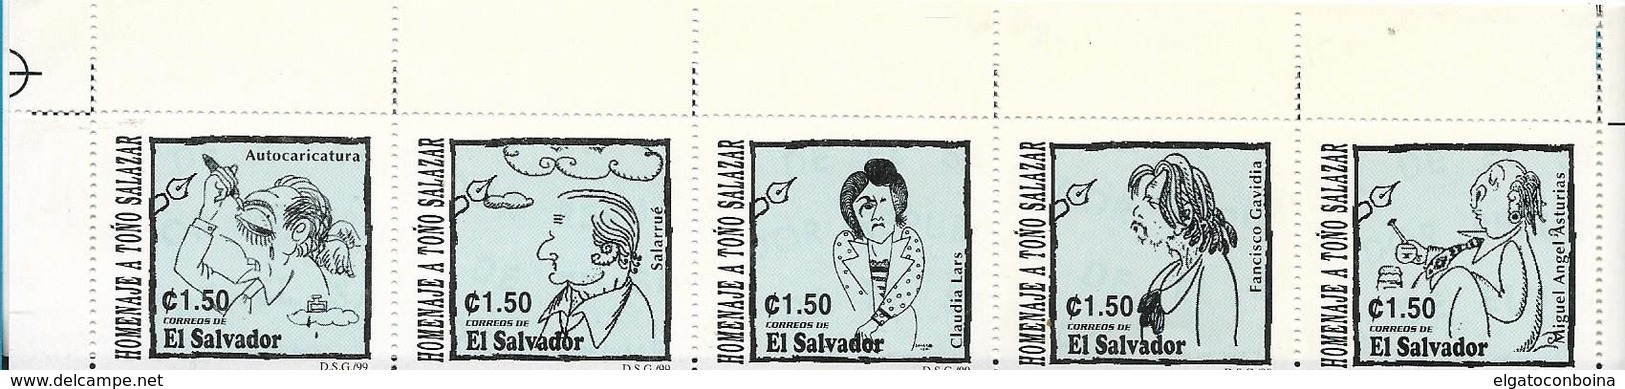 EL SALVADOR, 1999,  CARICATURIST TOÑO SALAZAR CARTOON DRAW SCOTT 1518 STRIP OF 5 VALUES - El Salvador